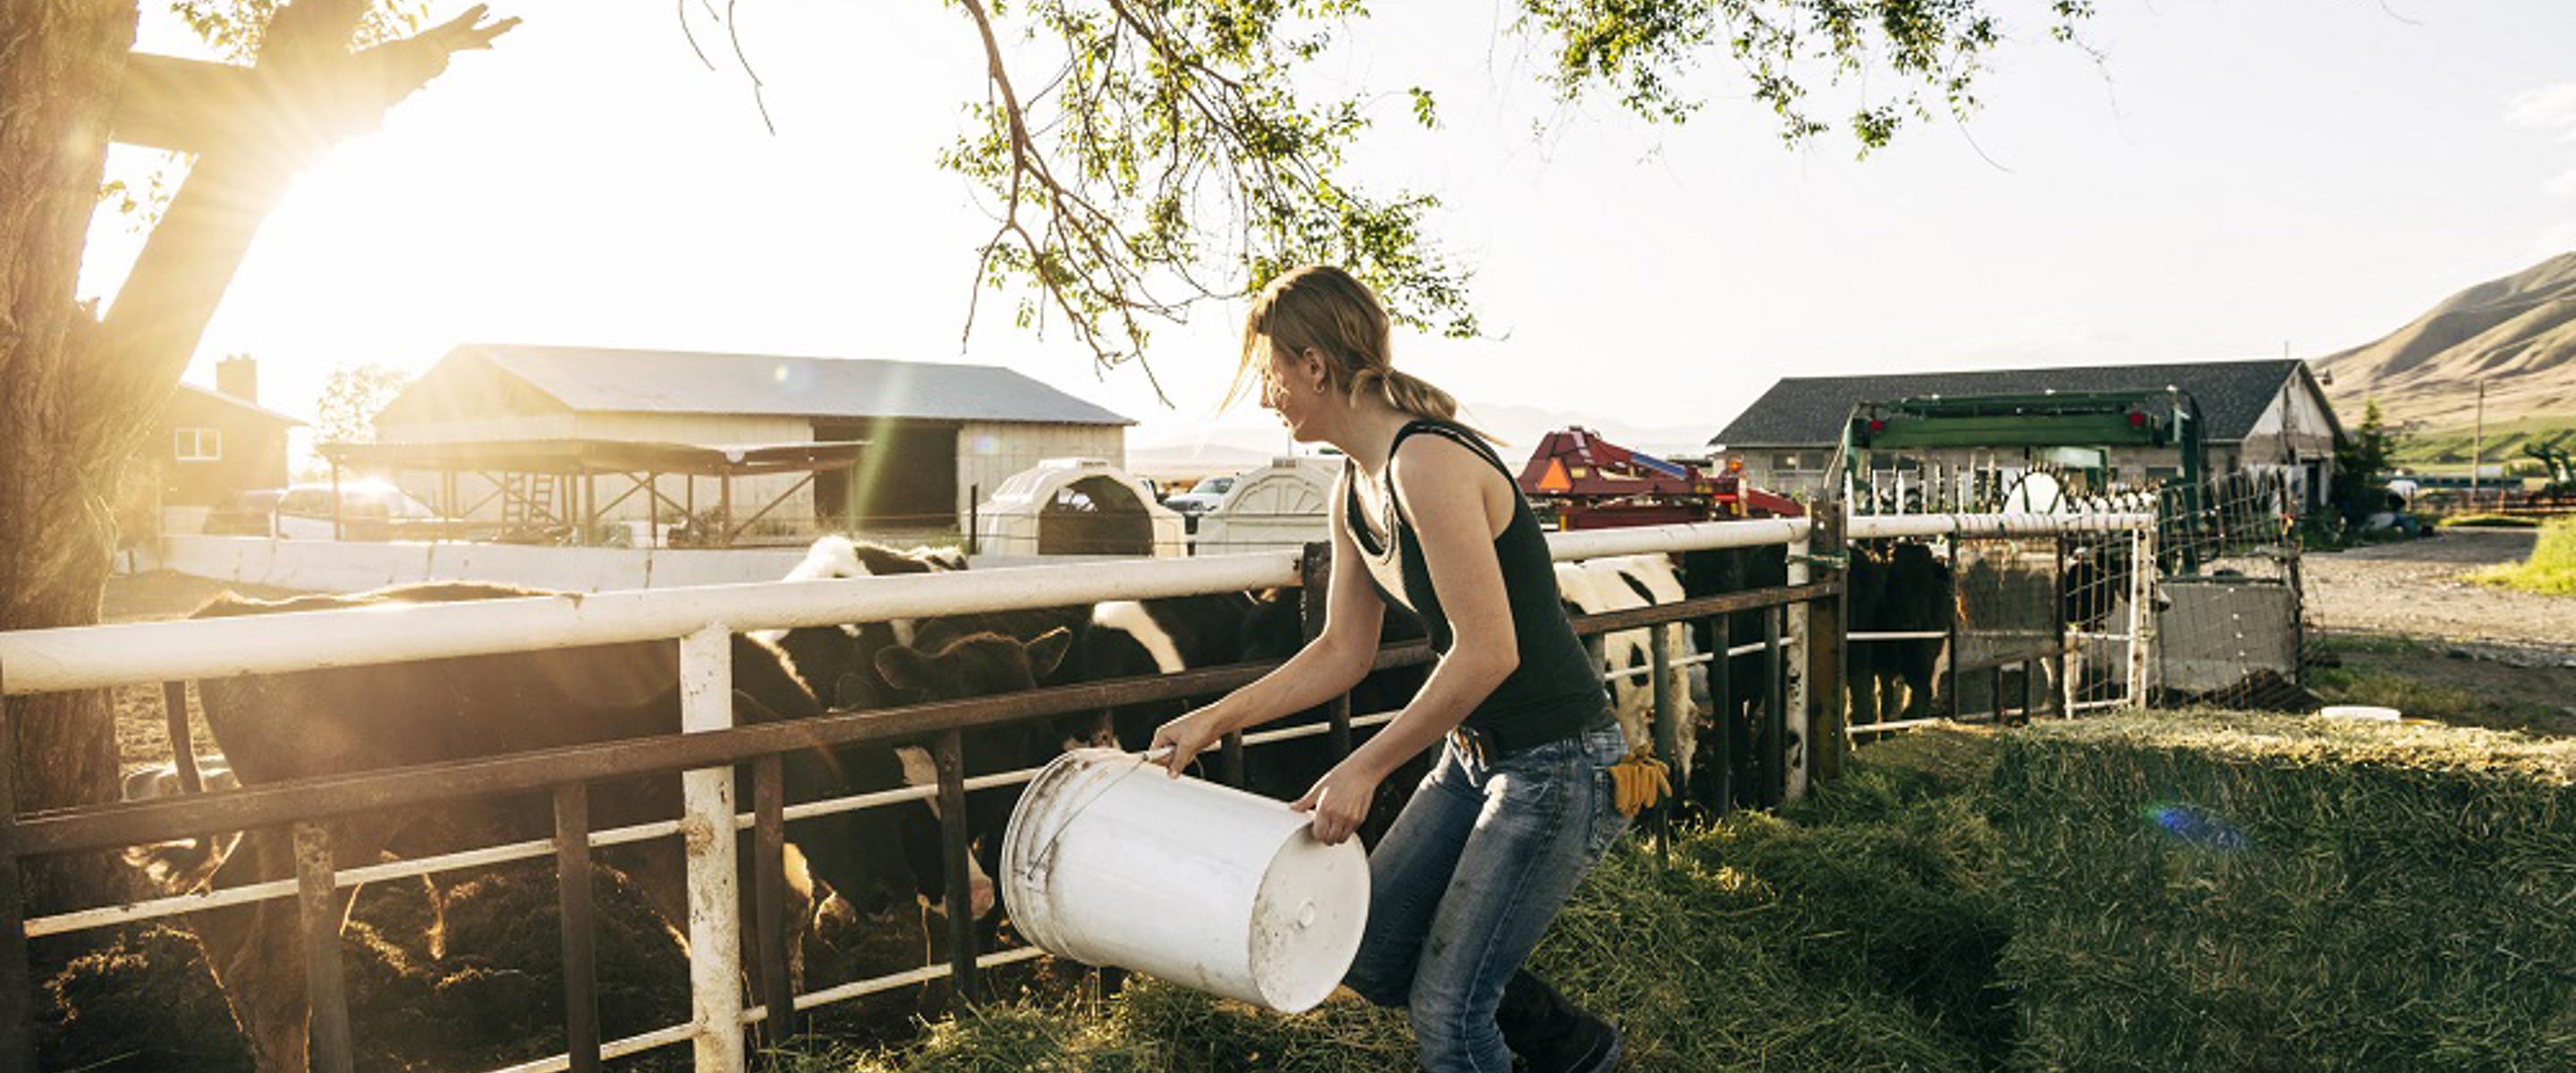 Woman feeding cattle with bucket